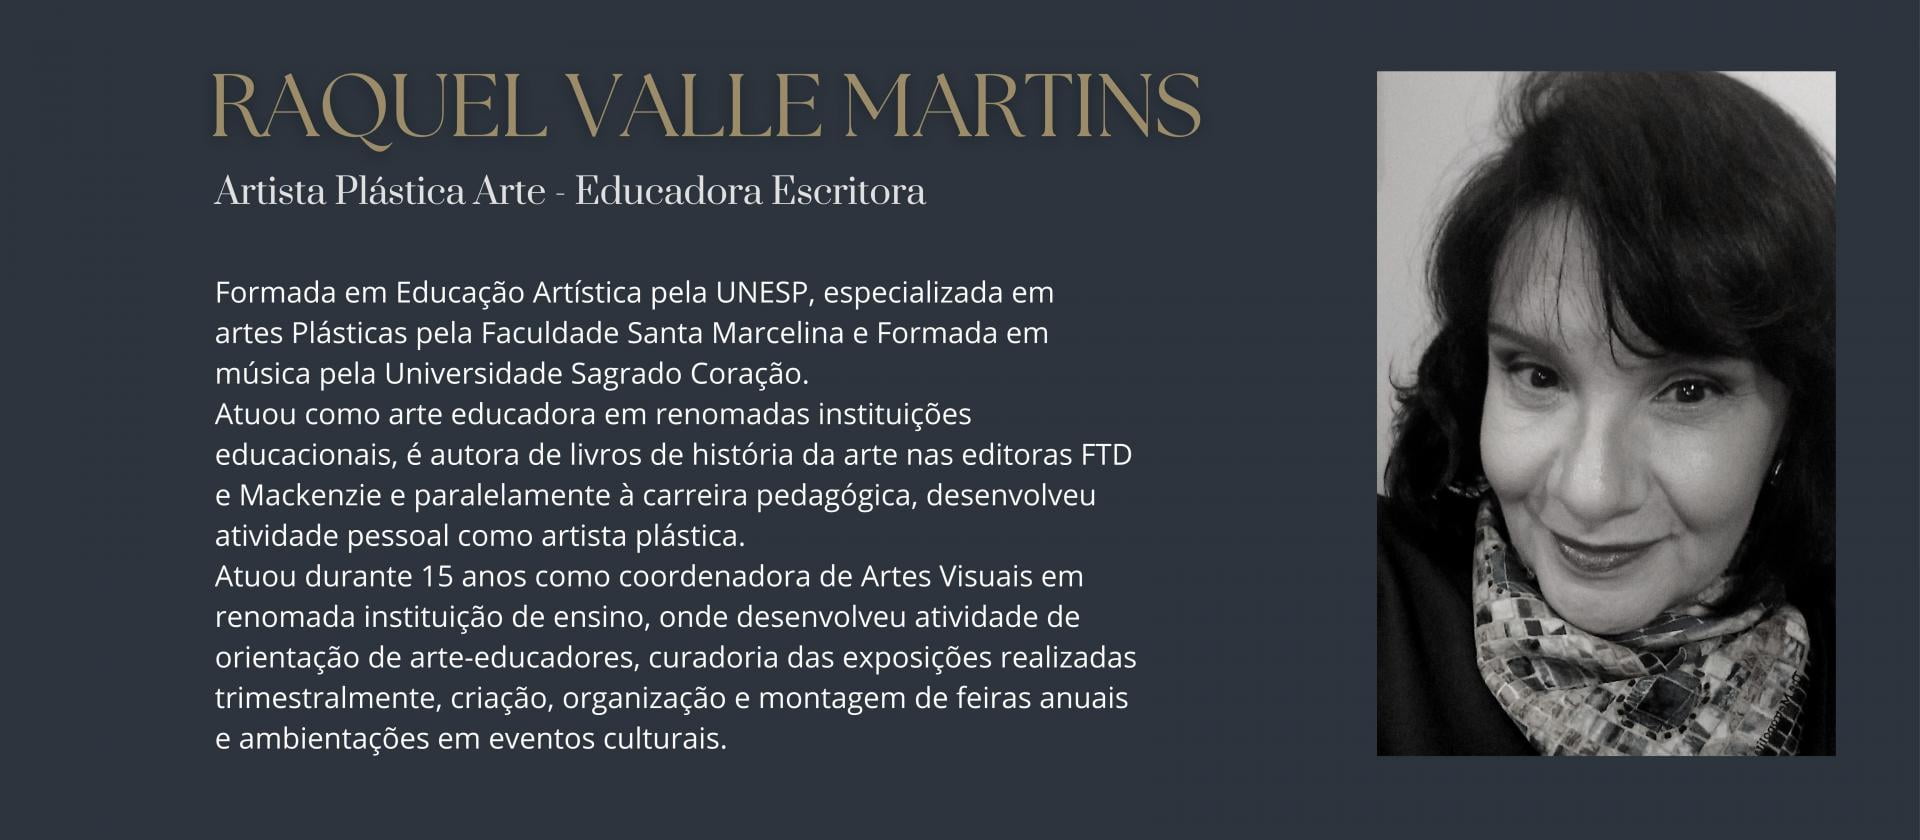 Raquel Valle Martins